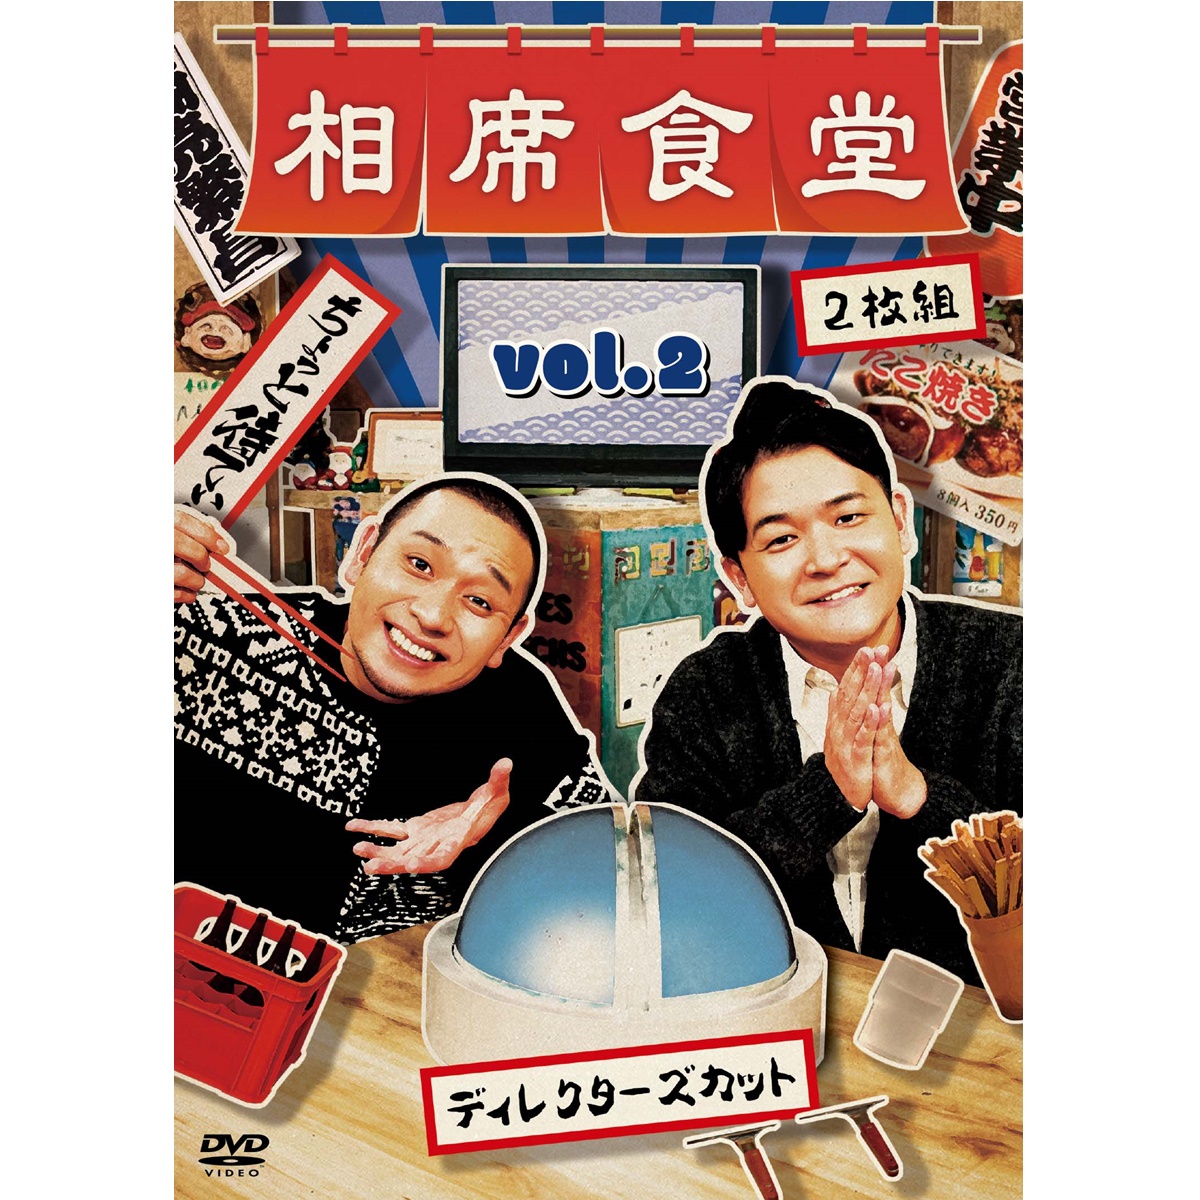 DVD「相席食堂 Vol.2～ディレクターズカット」通常版